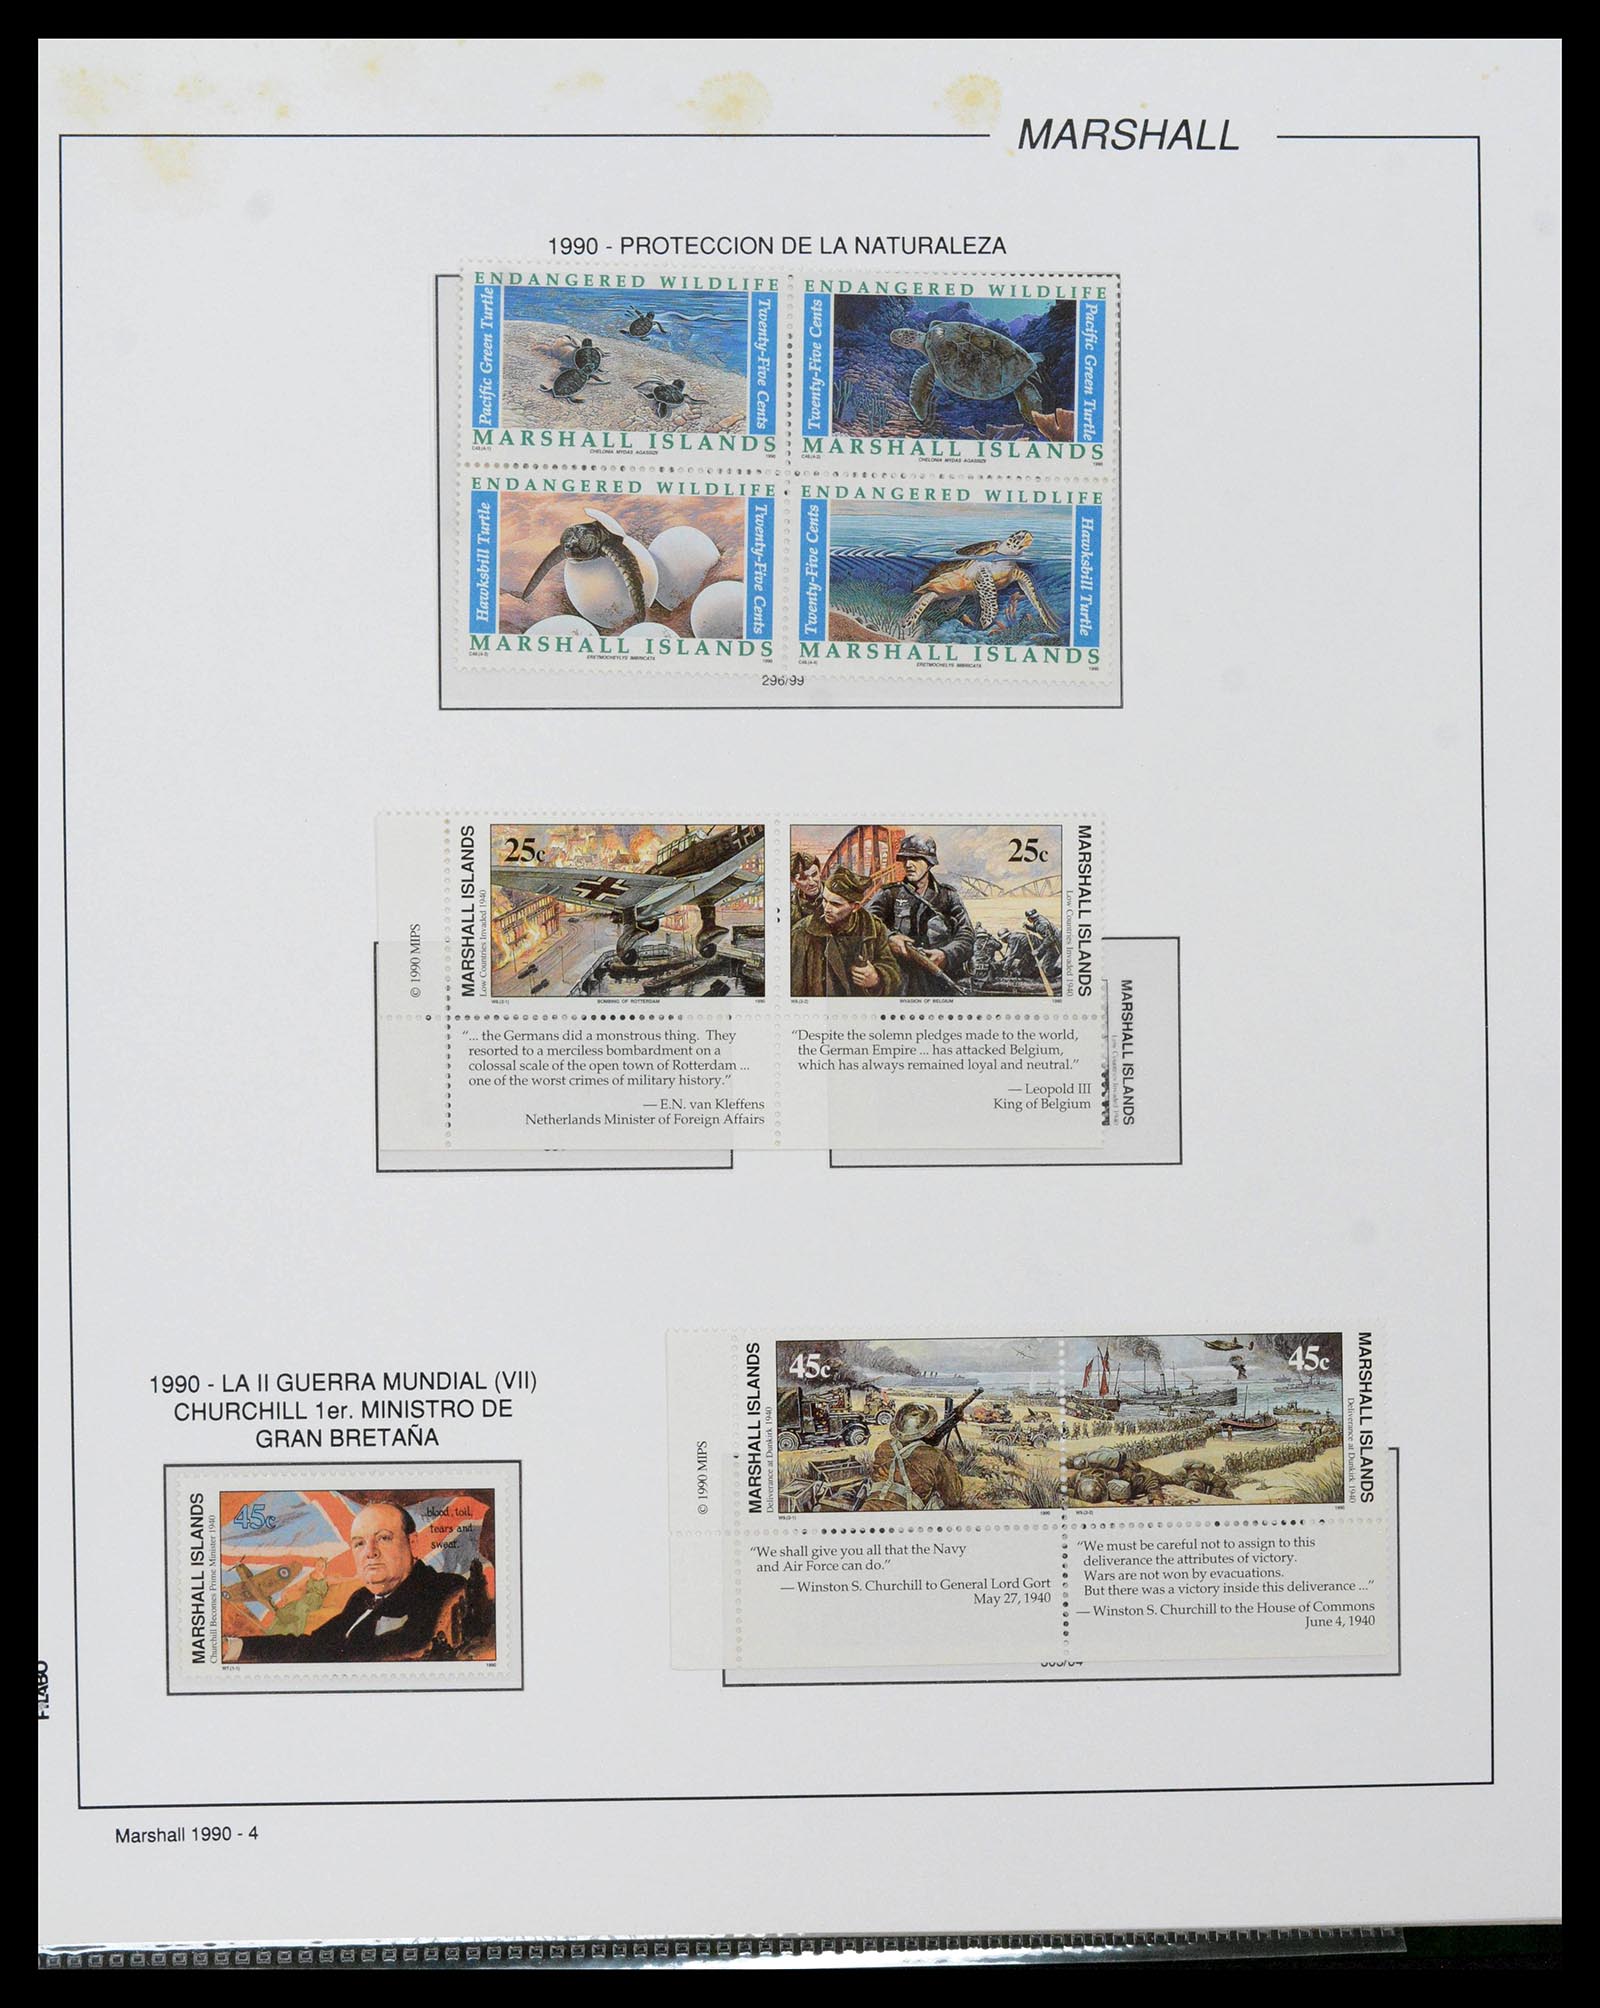 39222 0146 - Stamp collection 39222 Palau, Micronesia and Marshall islands 1980-1995.